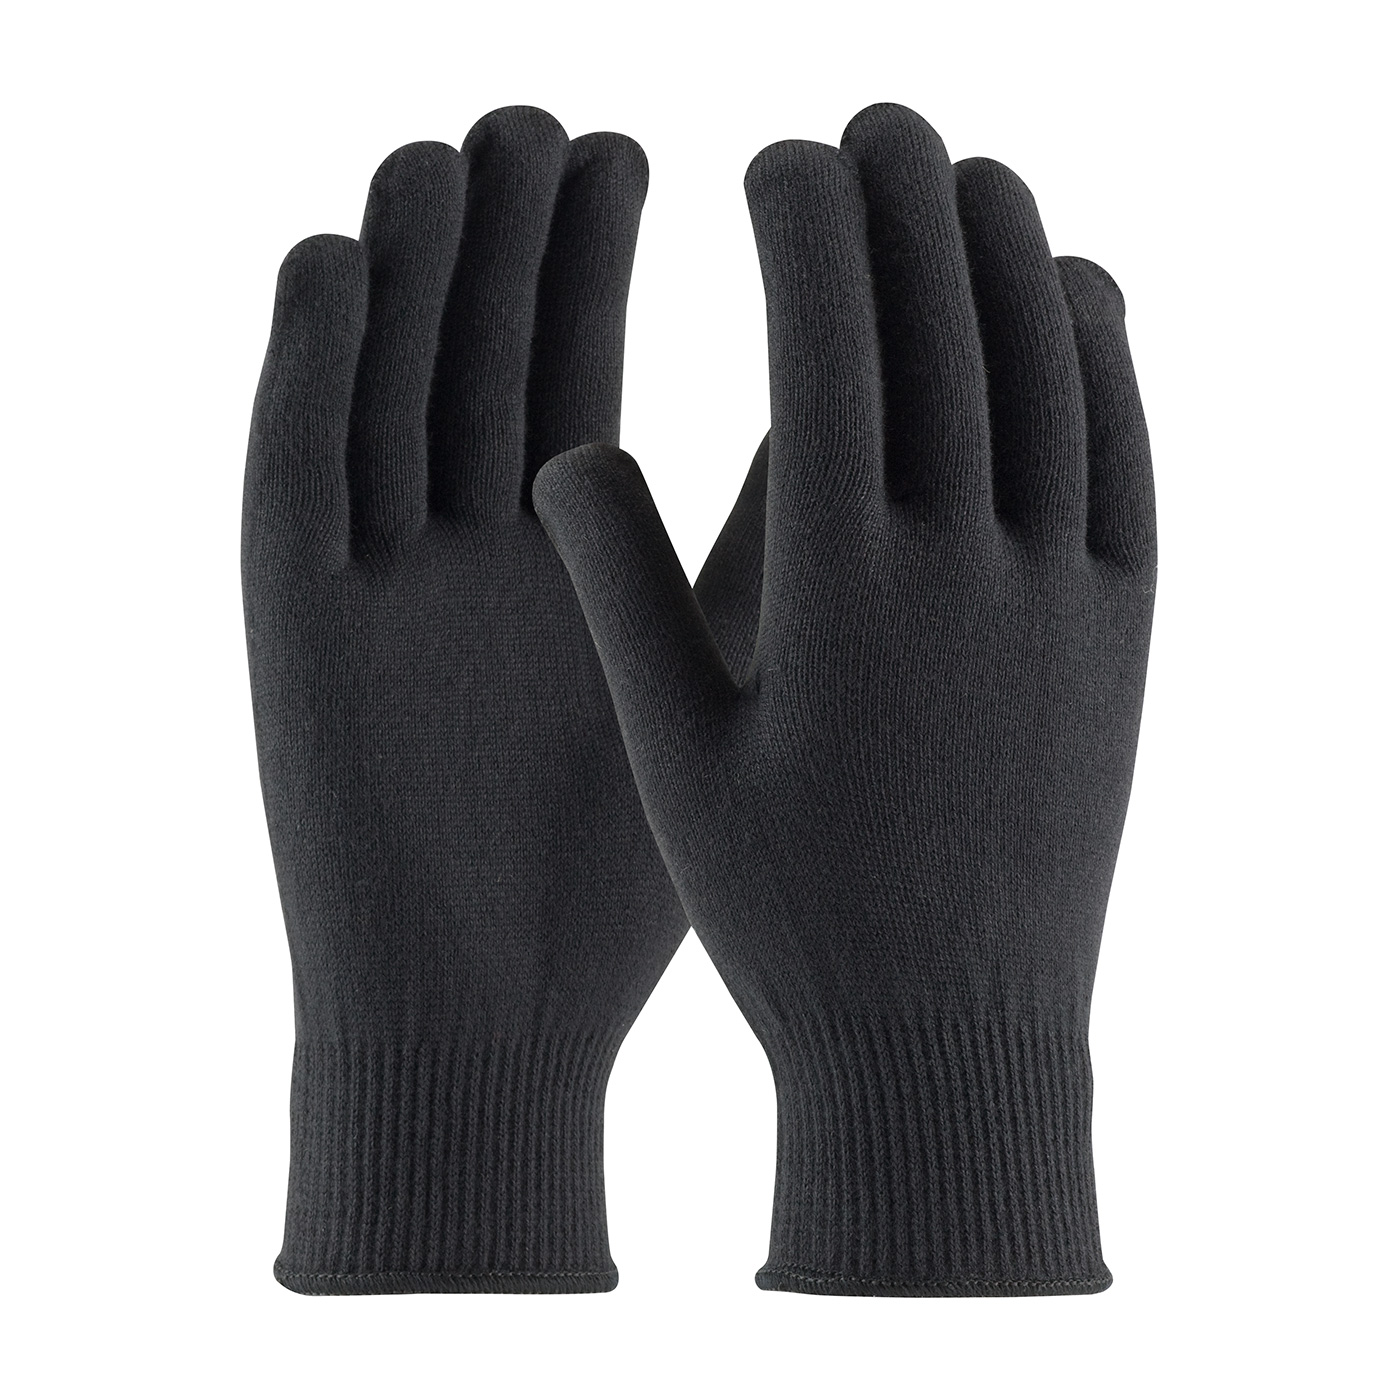 #41-001 PIP® 13 Gauge Seamless Knit Thermax® Glove - Black